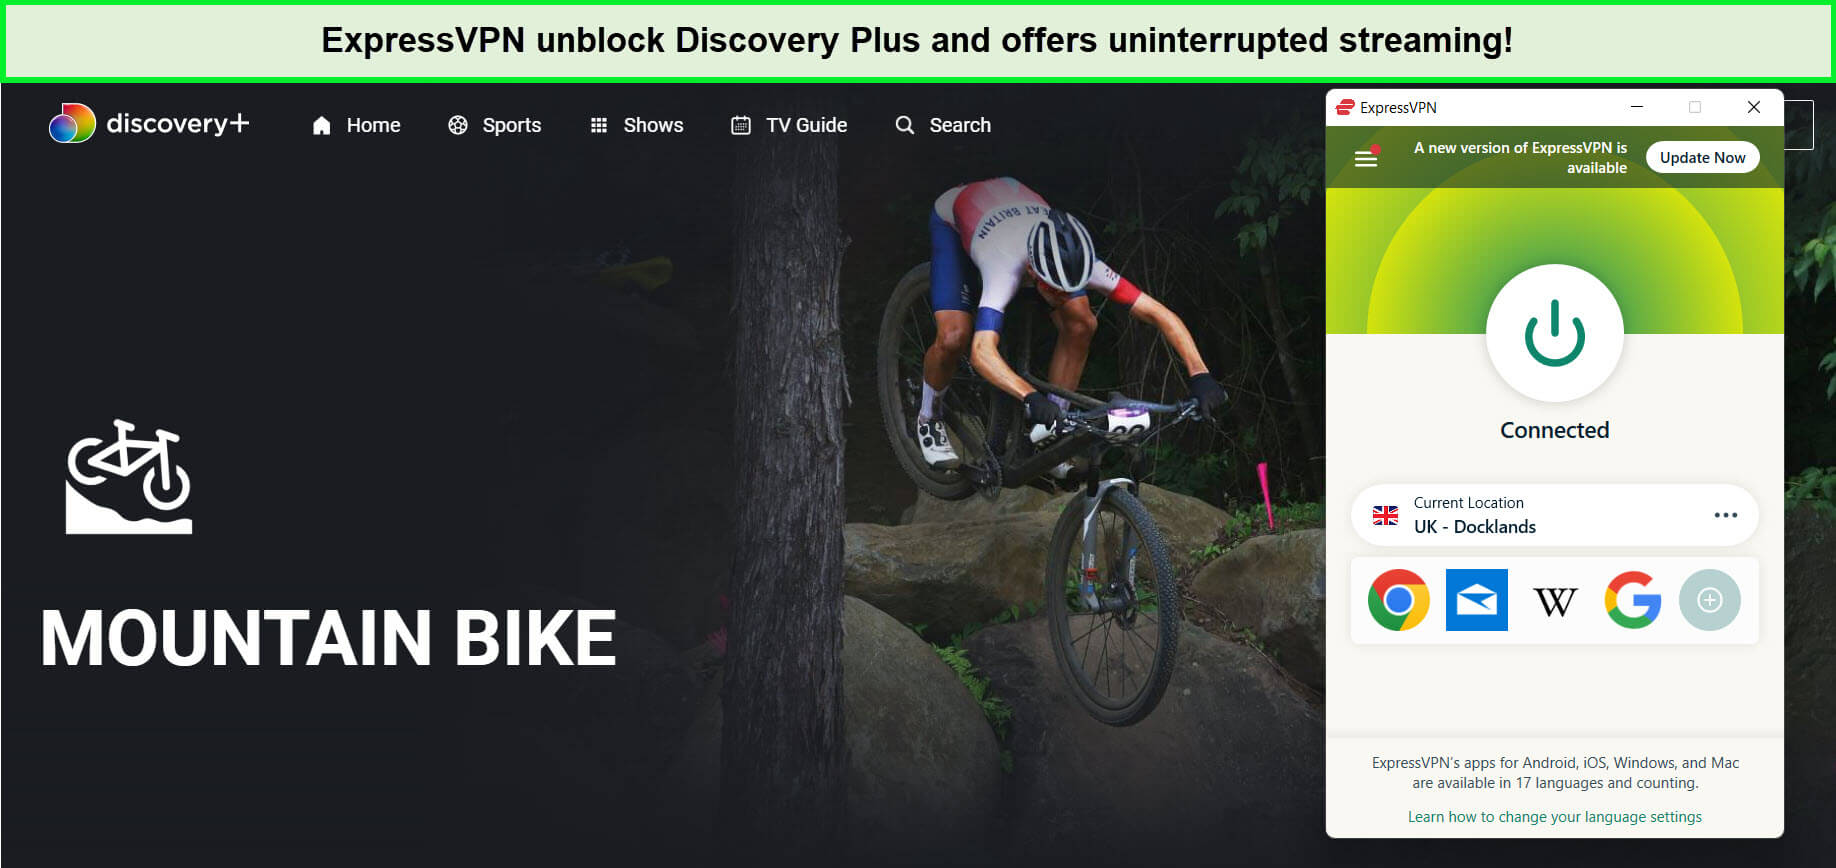 expressvpn-unblocks-uci-mountain-bike-world-series-in-Japan-discovery-plus